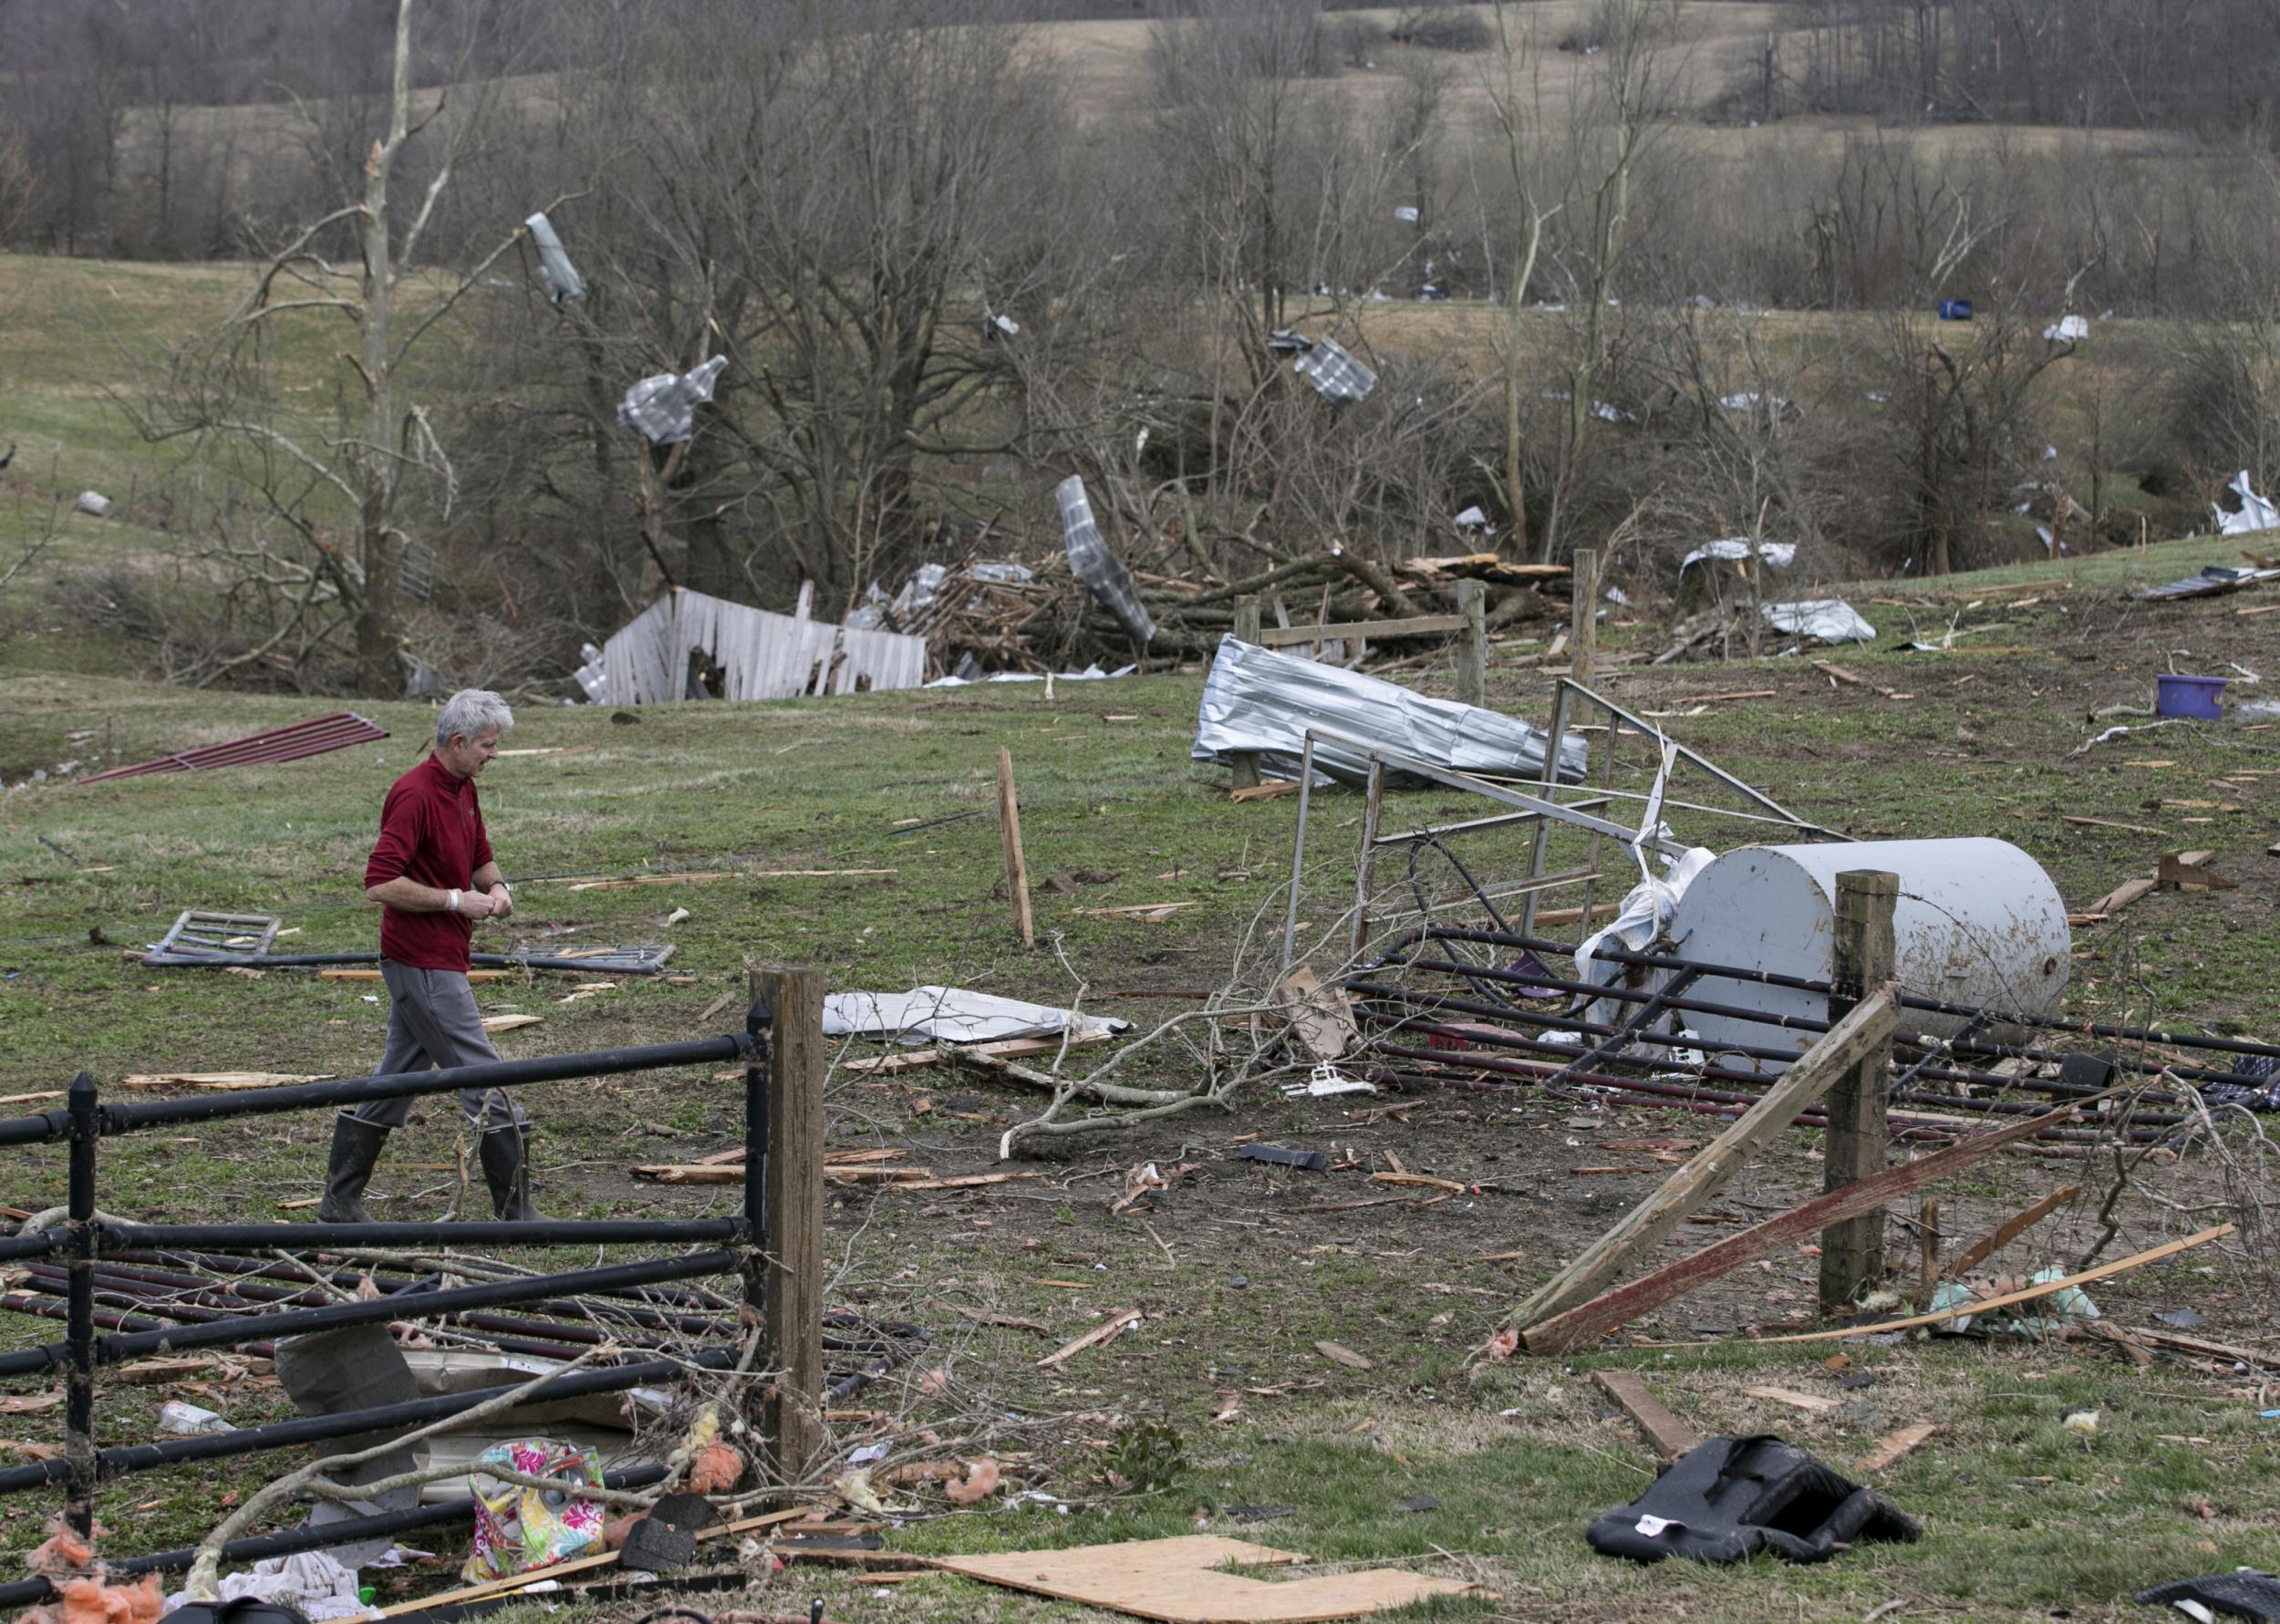 Kentucky tornado: Children miraculously survive after twister rips apart church